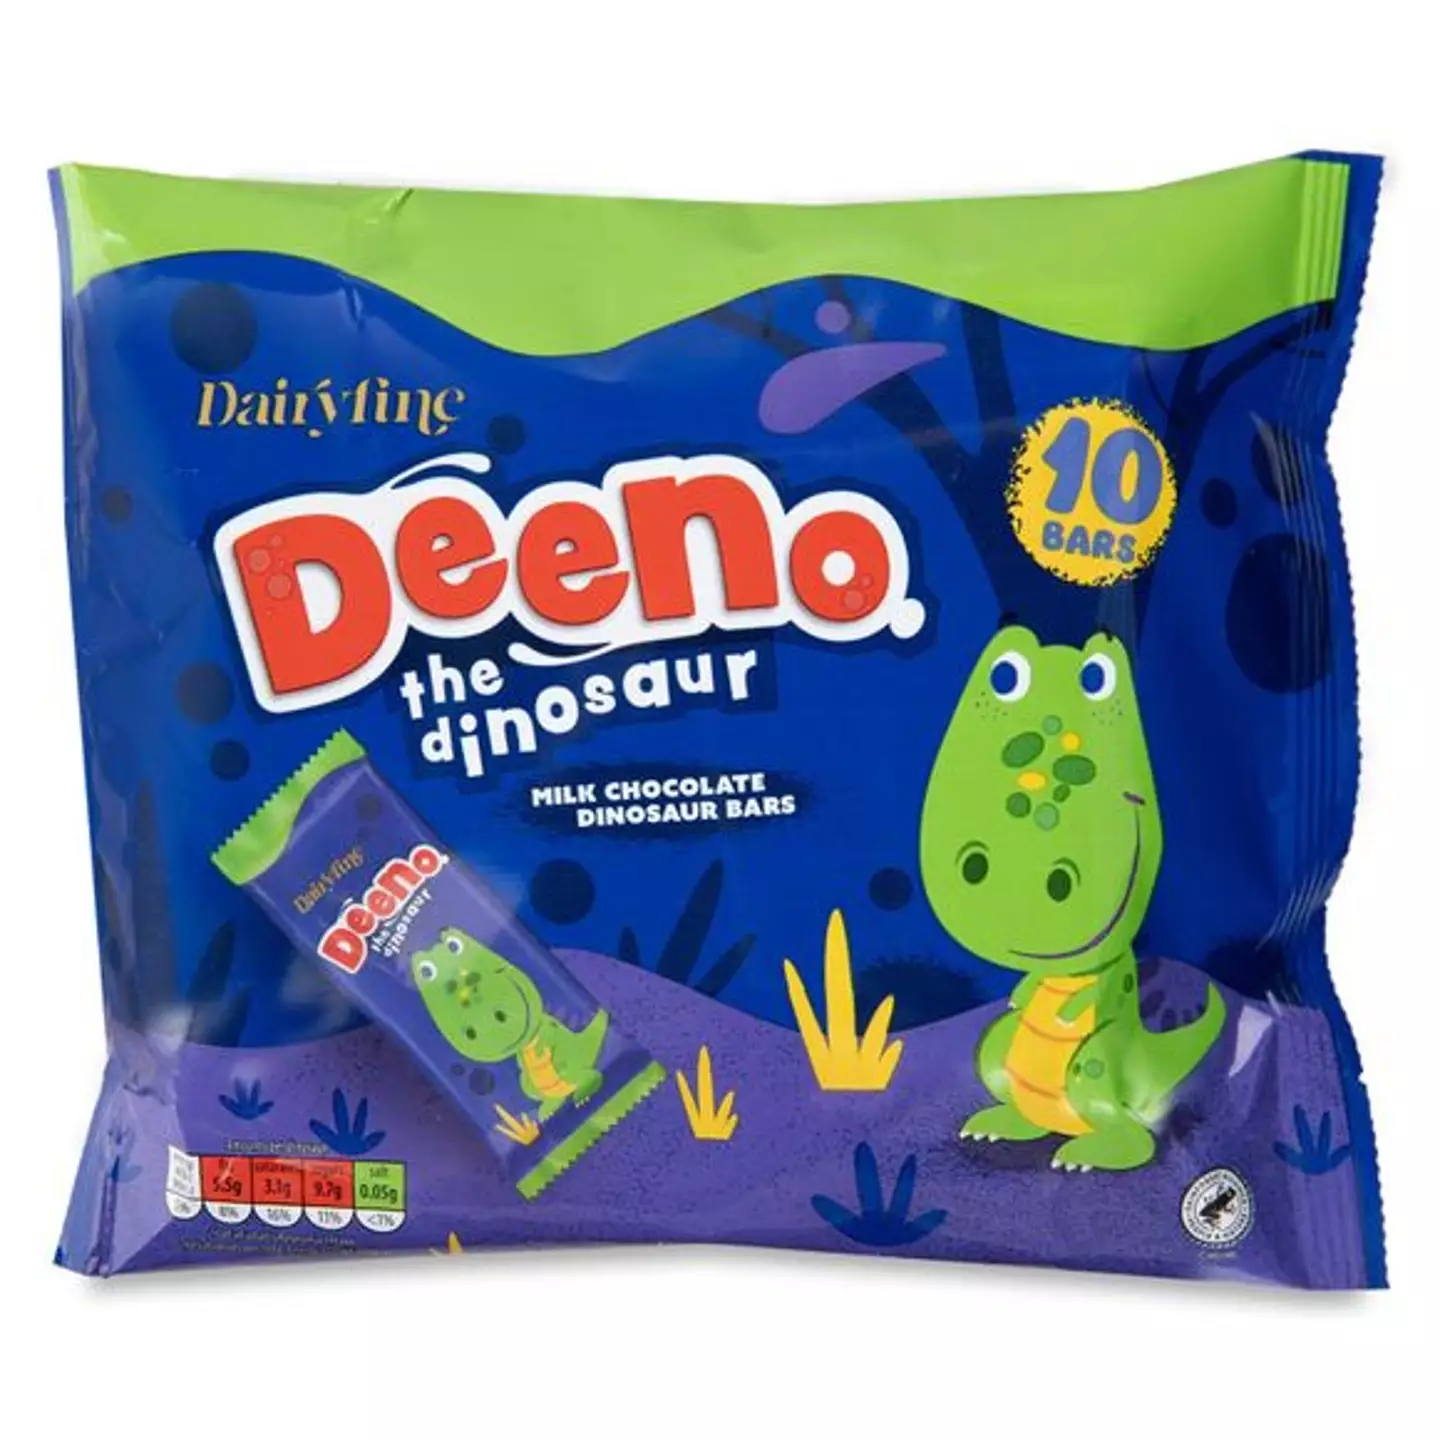 Aldi's chocolate bar is called Deeno the Dinosaur.